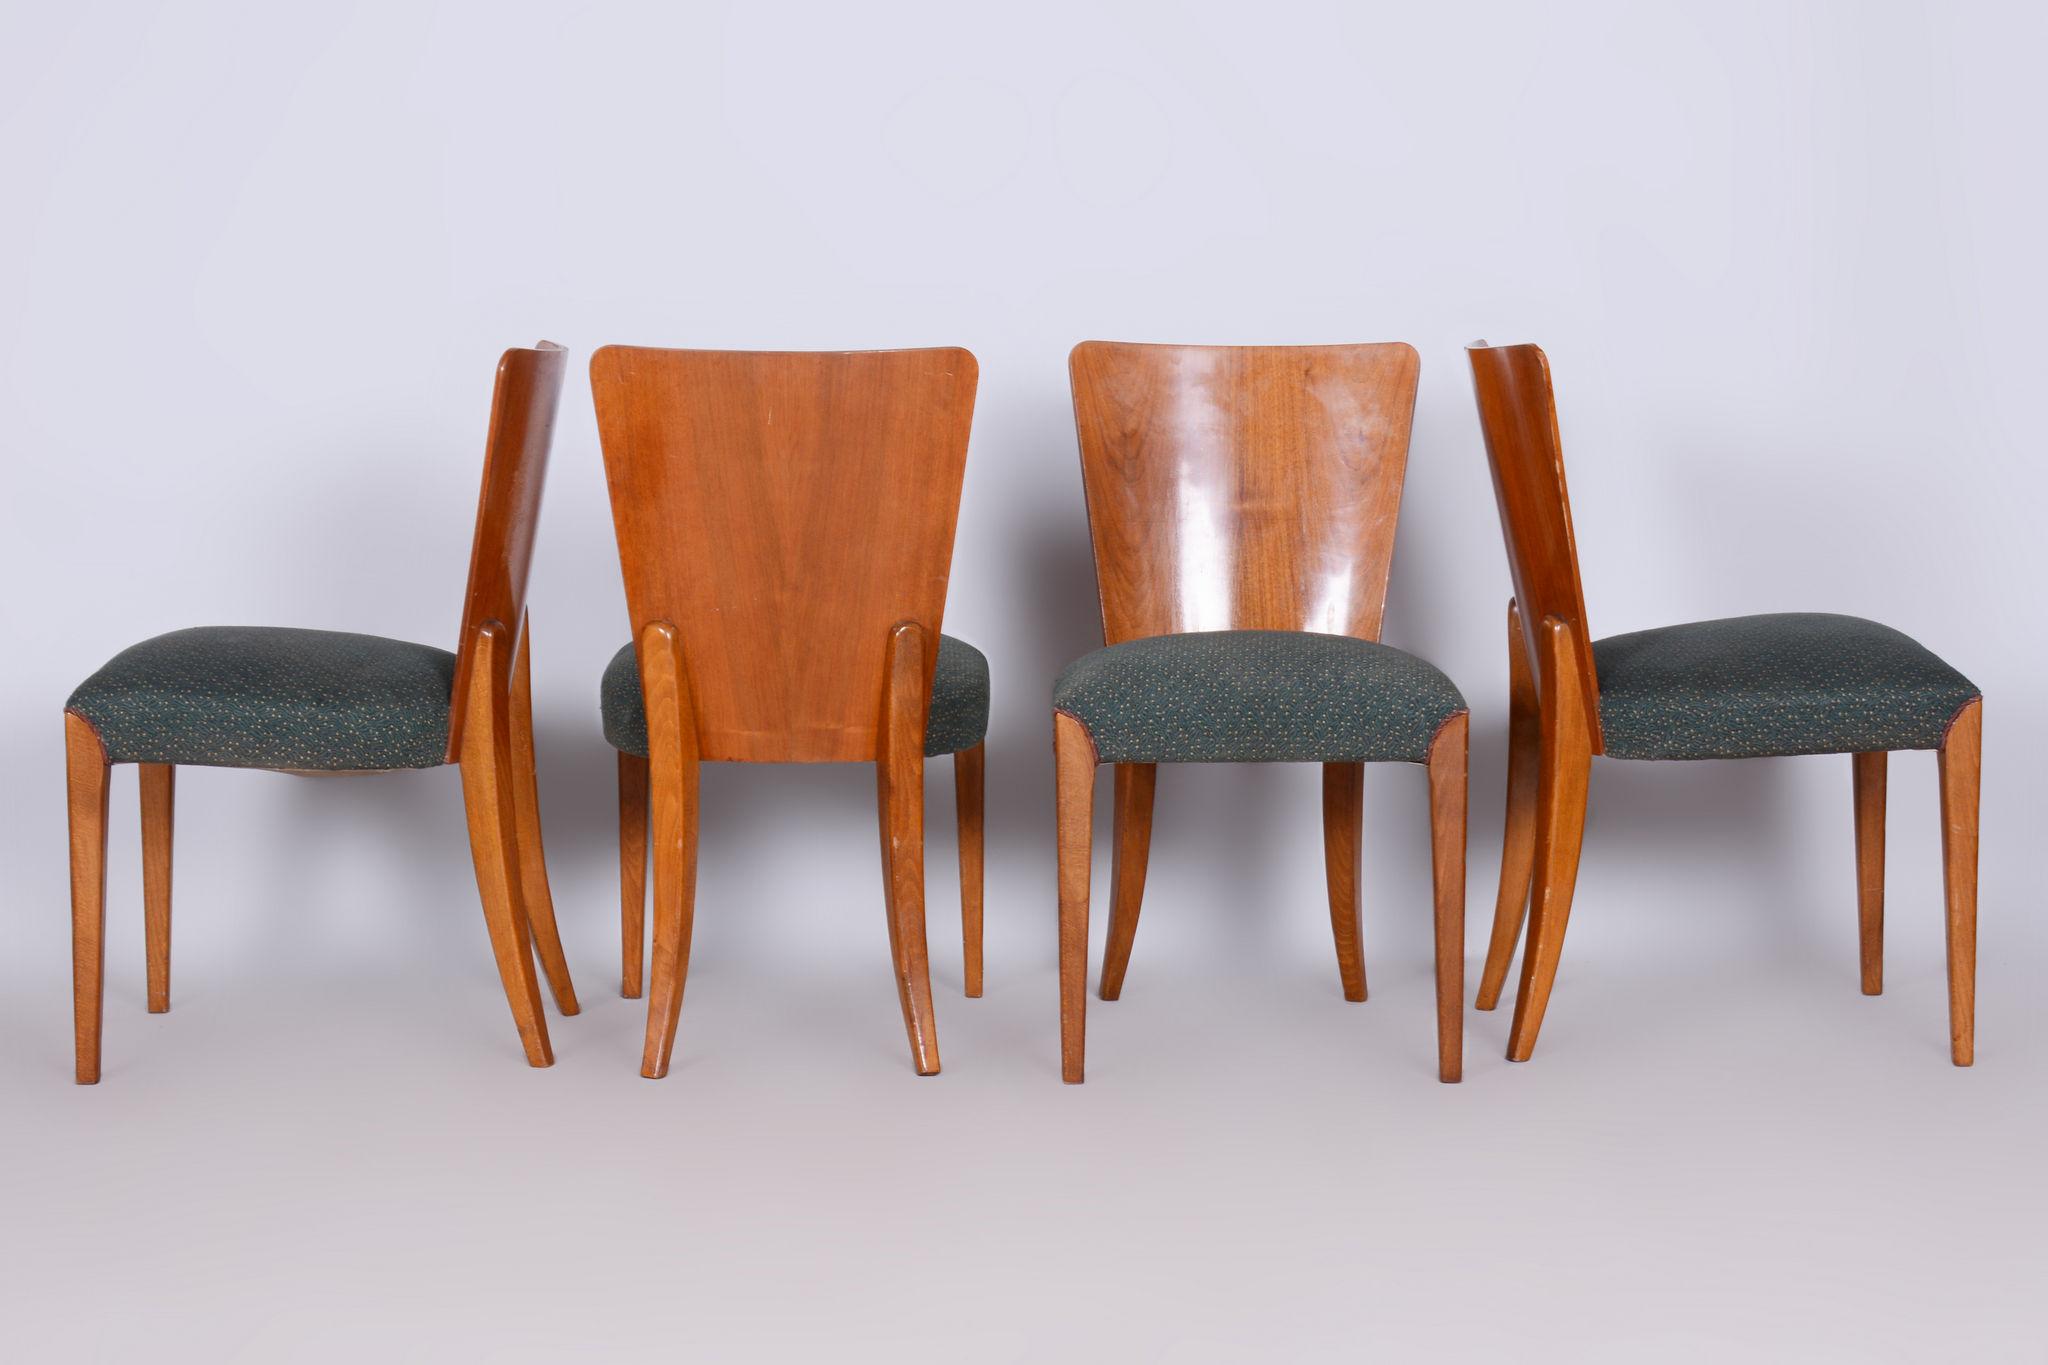 Set of Four Original ArtDeco Chairs, Halabala, UP Zavody, Beech, Czechia, 1940s For Sale 2